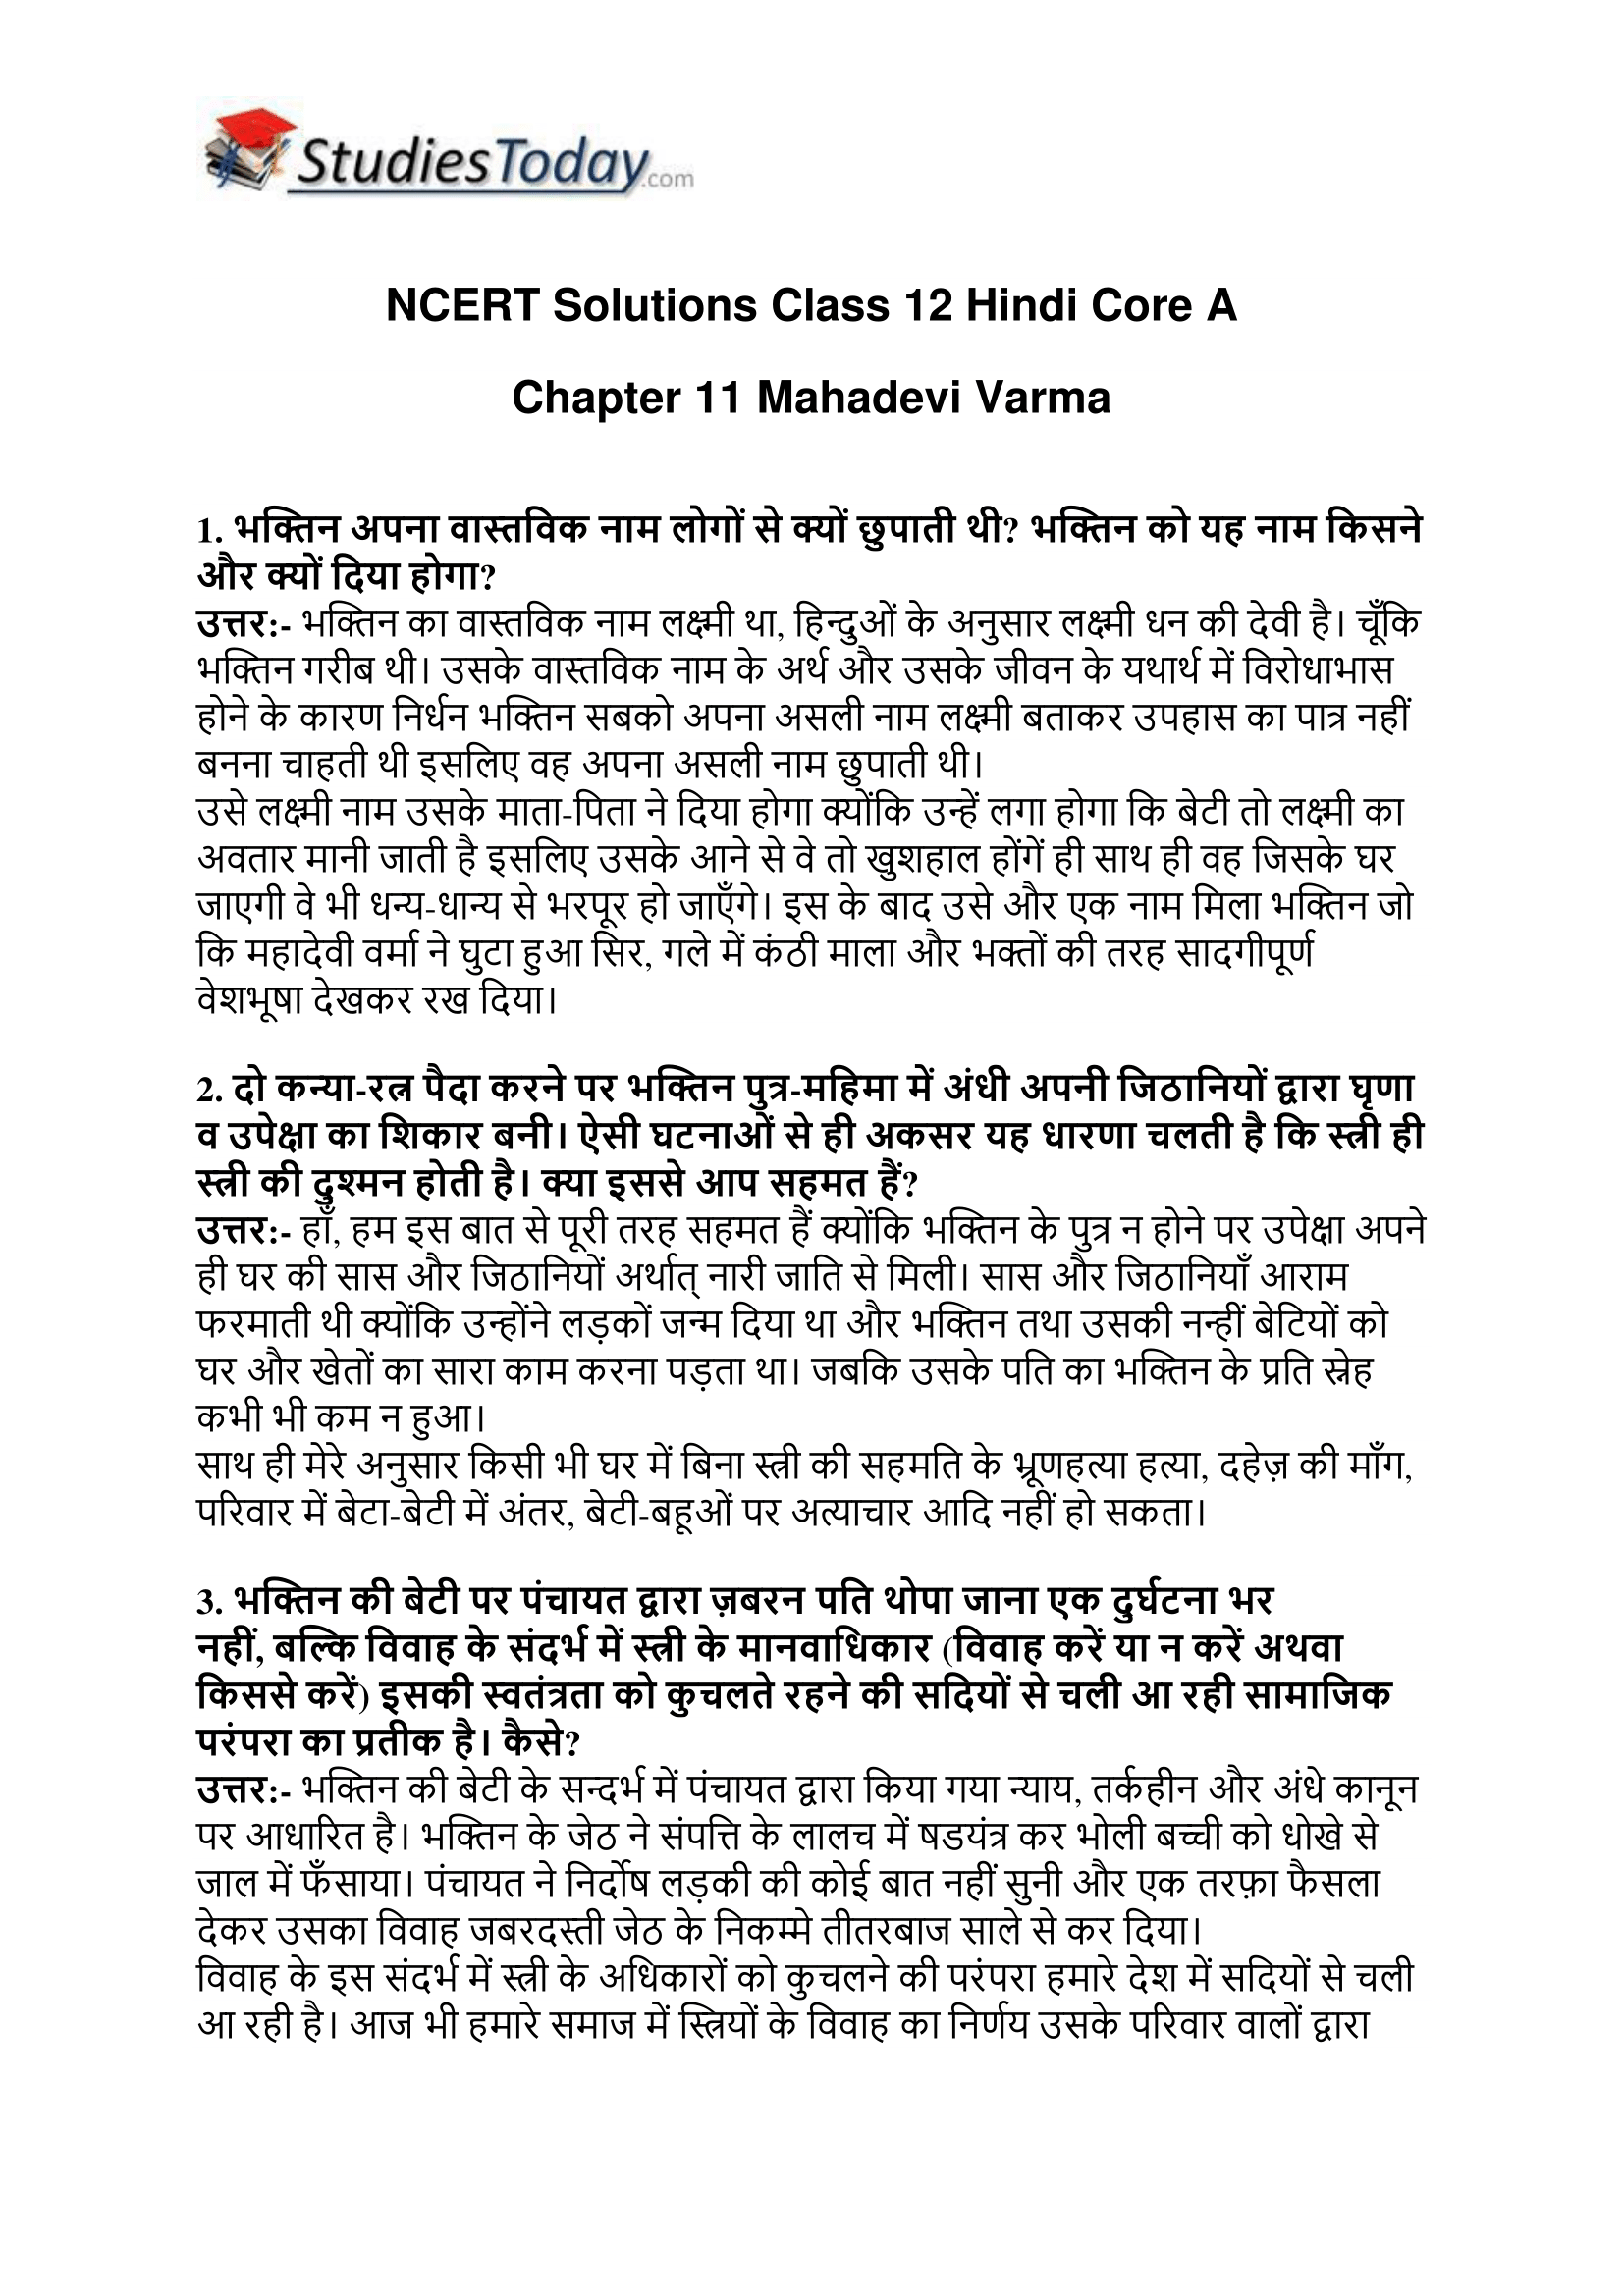 ncert-solutions-class-12-hindi-core-a-chapter-11-mahadevi-varma-1